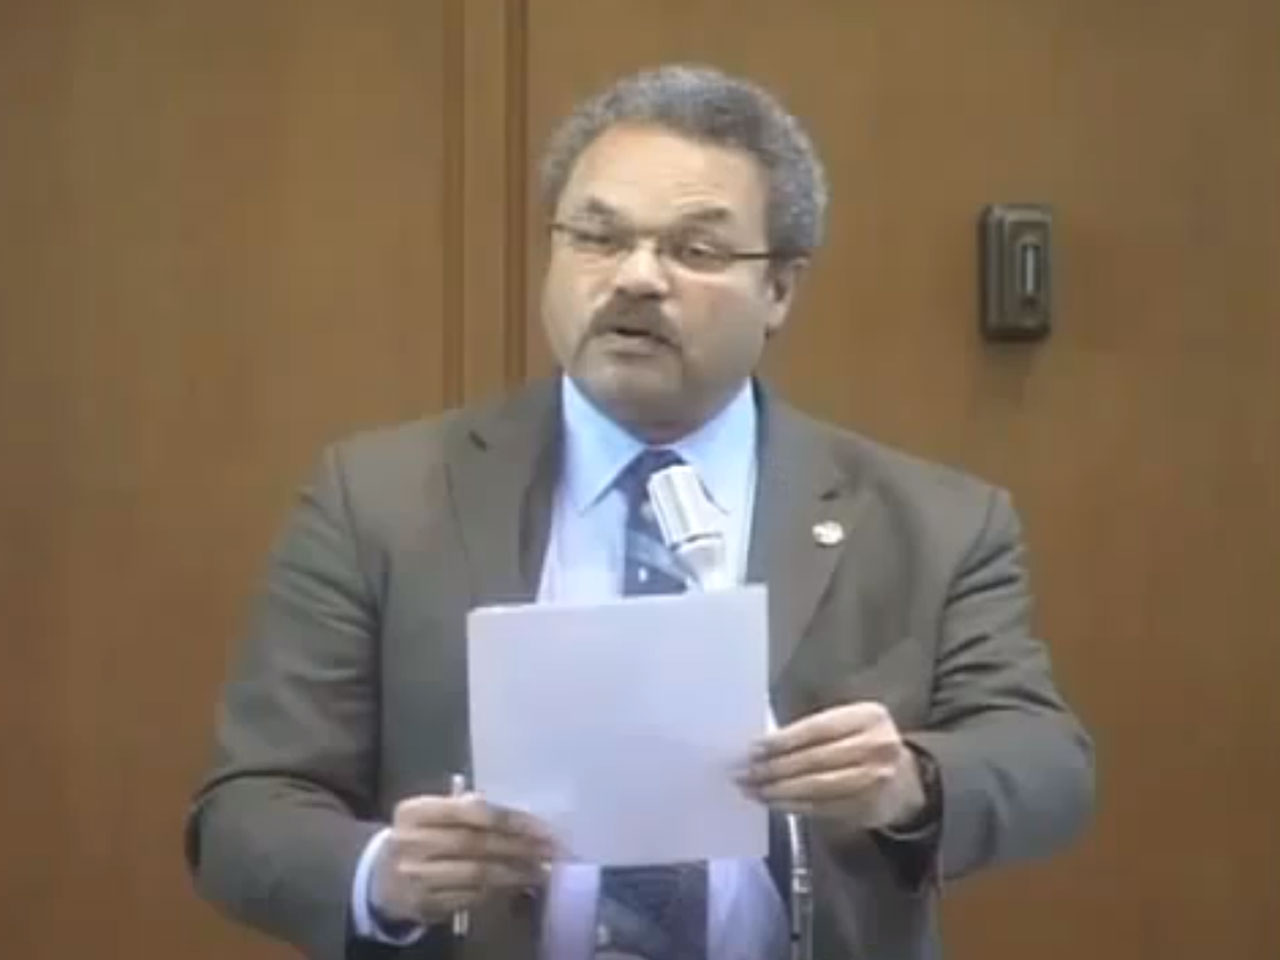 Oregon State Legislators RickRoll: Lawmakers Sneak Lines From Rick Astley  Hit Into Speeches [VIDEO]